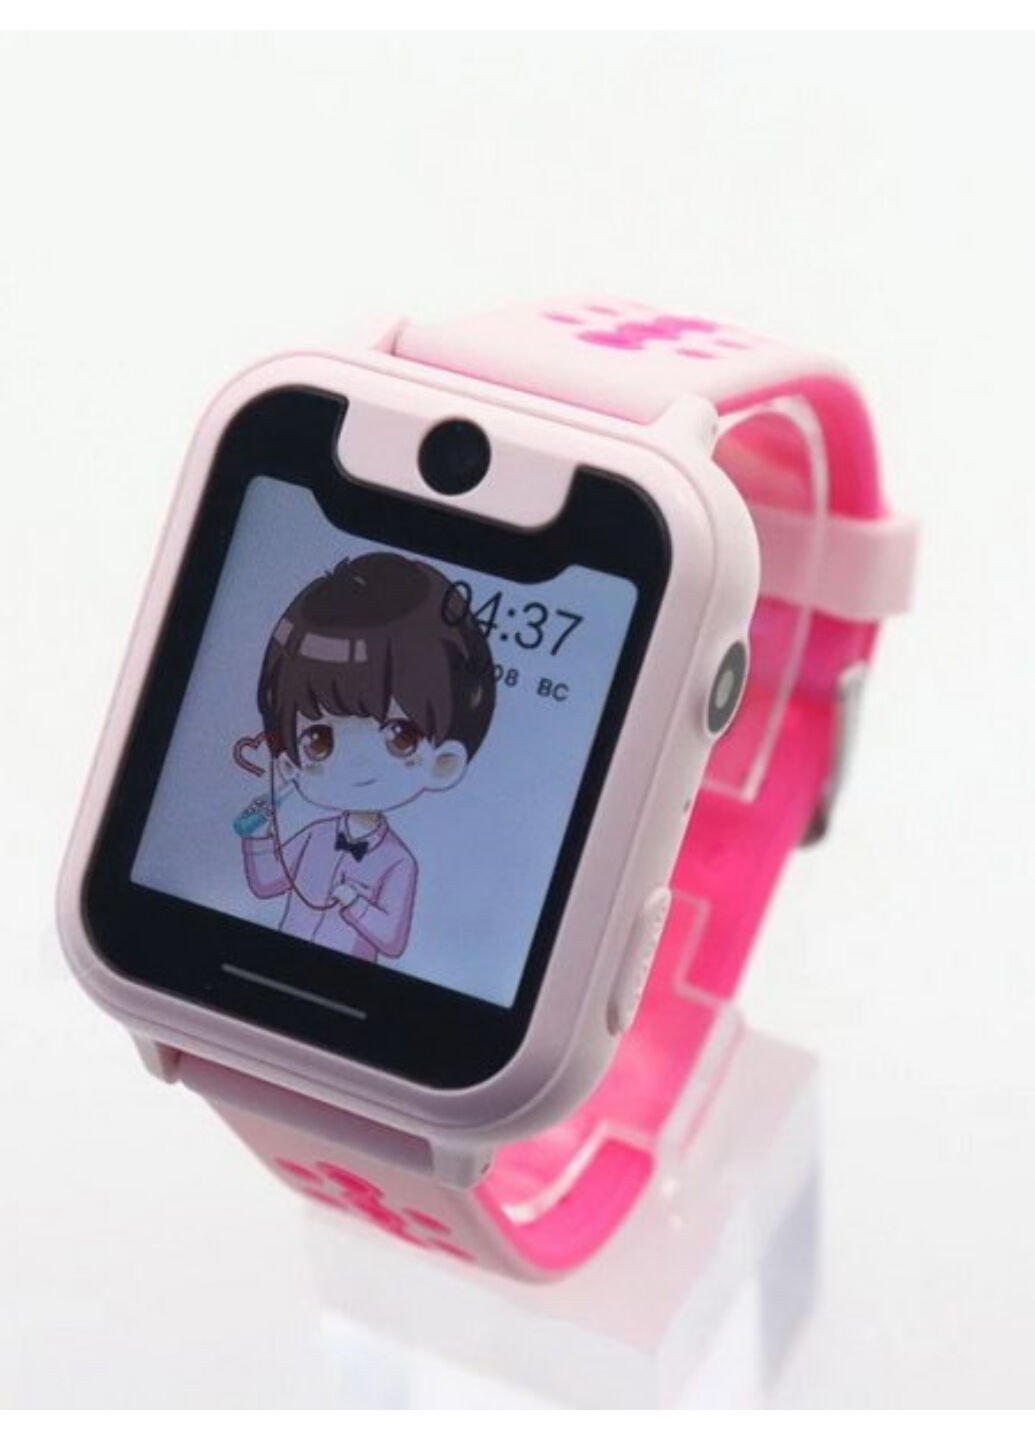 Смарт-часы Clude swd2003g pink (256648755)